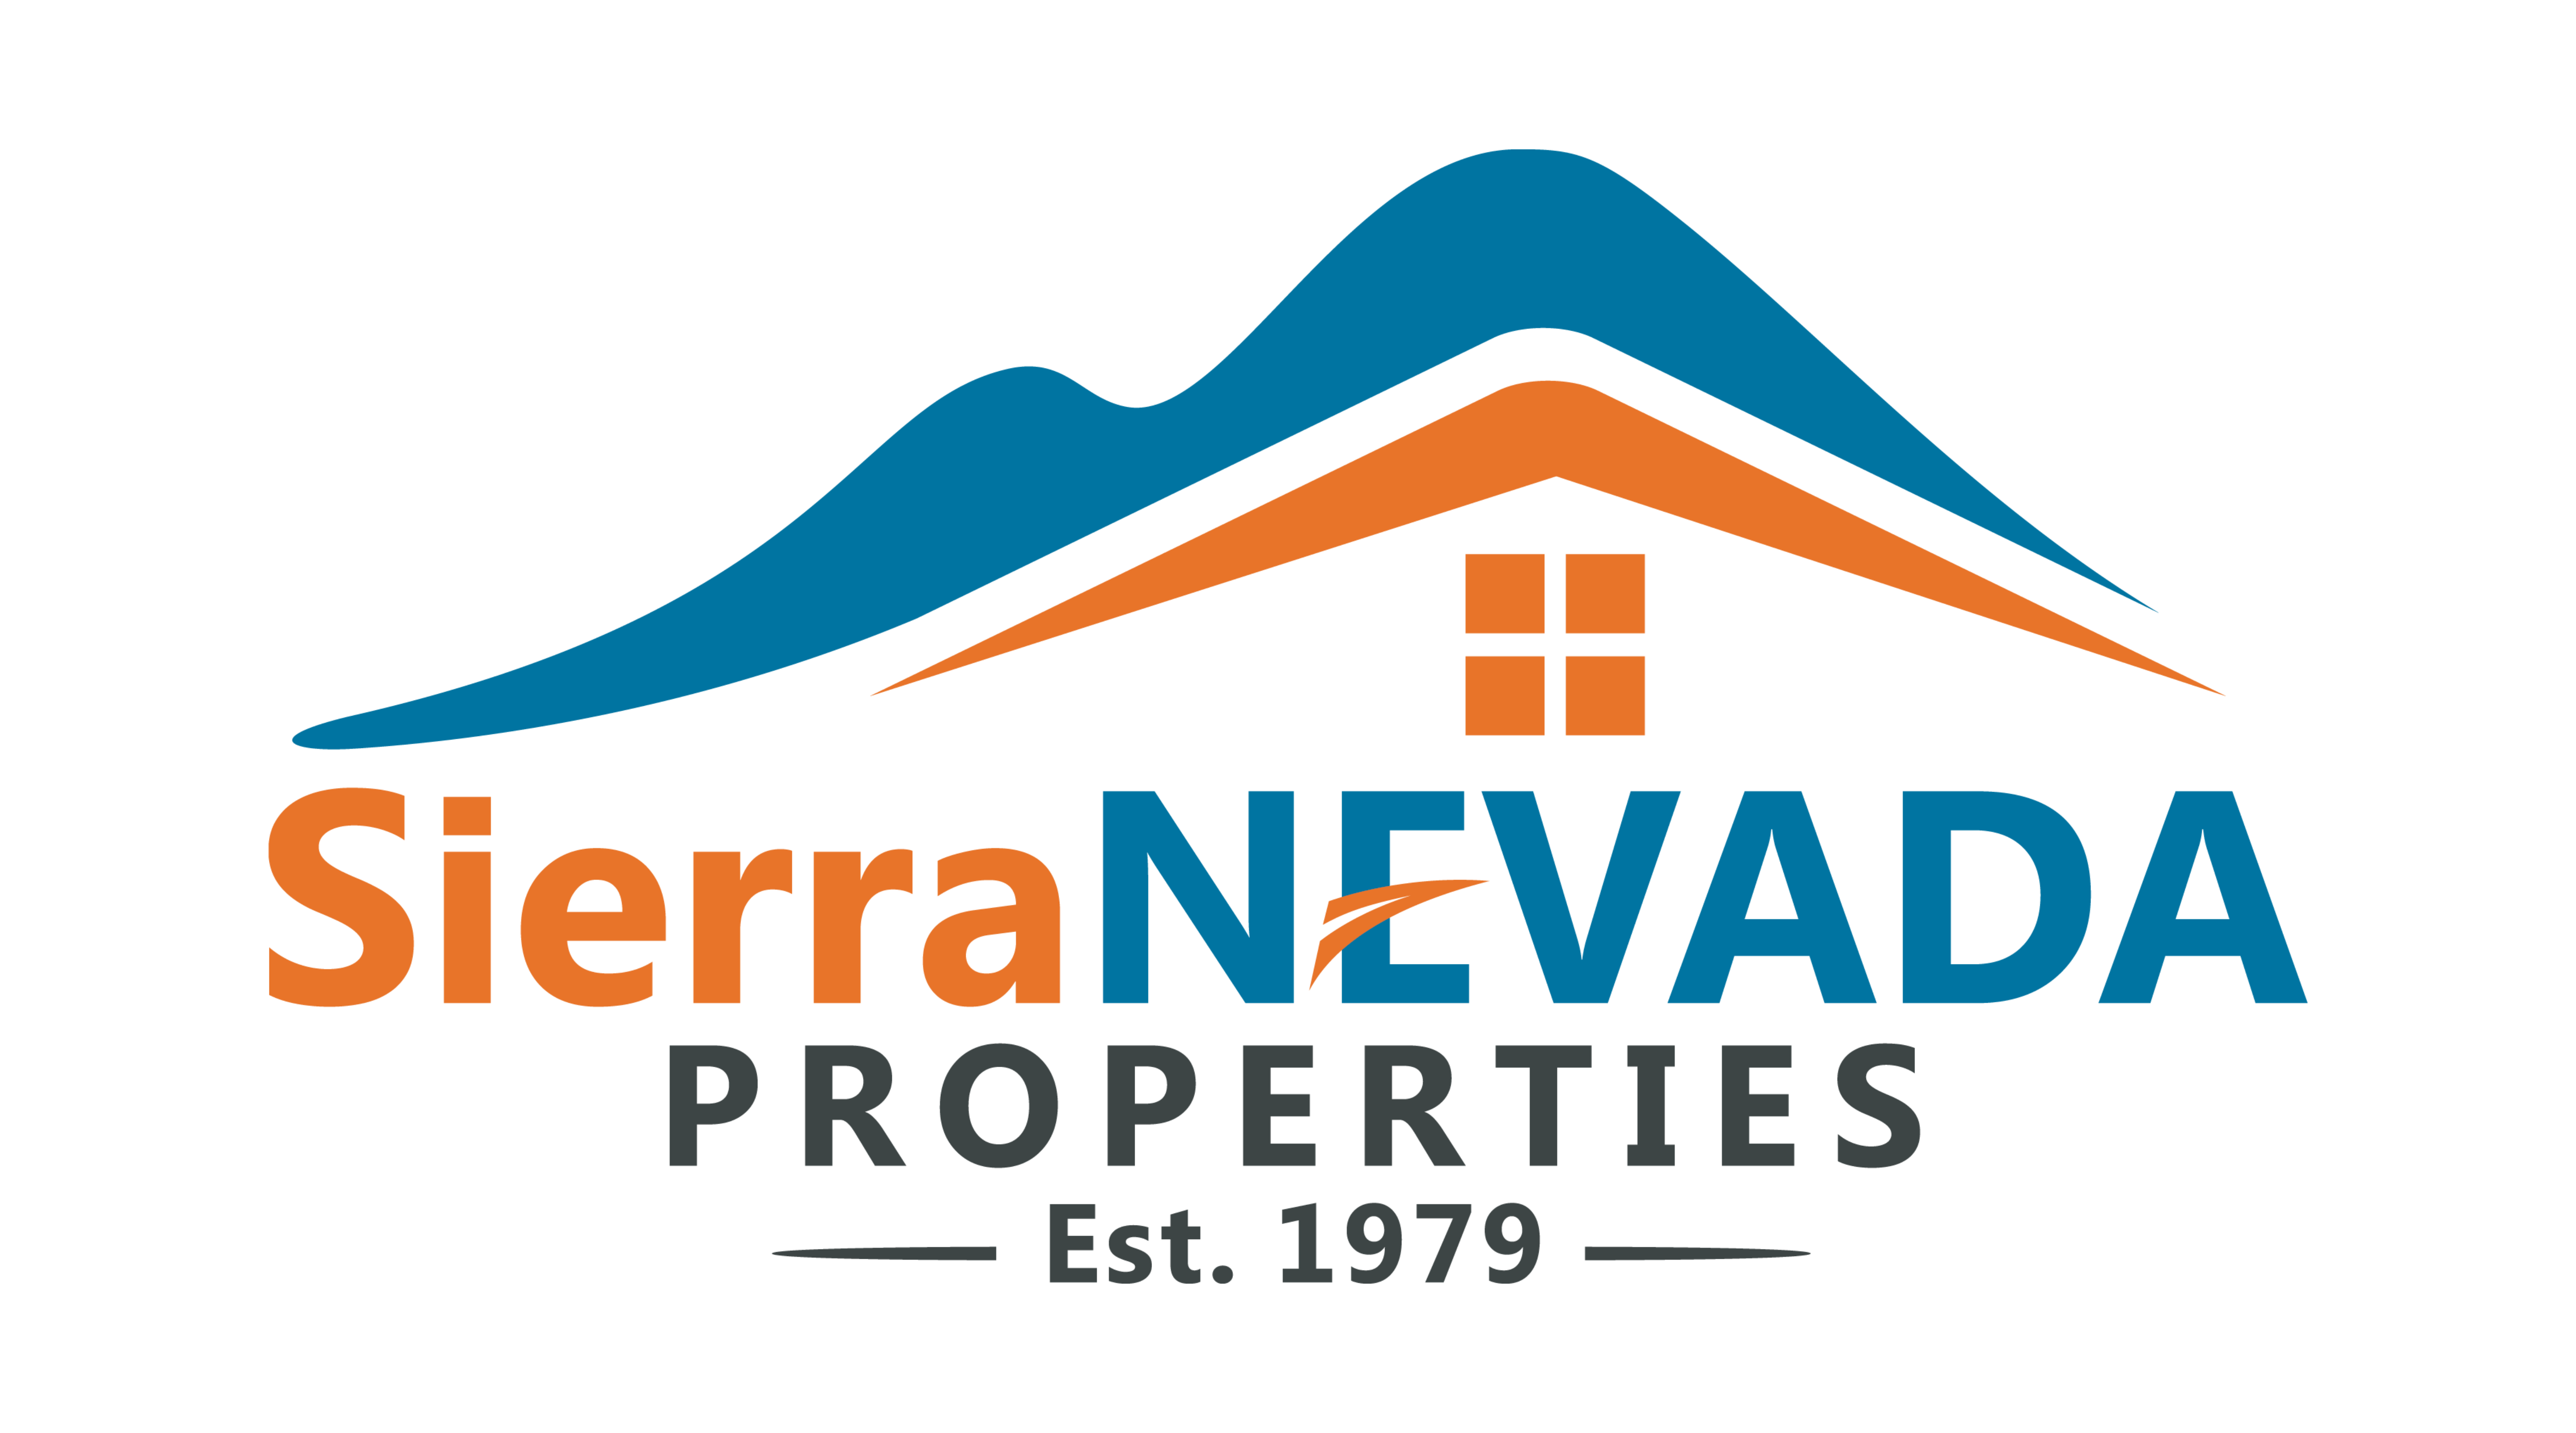 Santiago Solano - Sierra Nevada Properties Logo